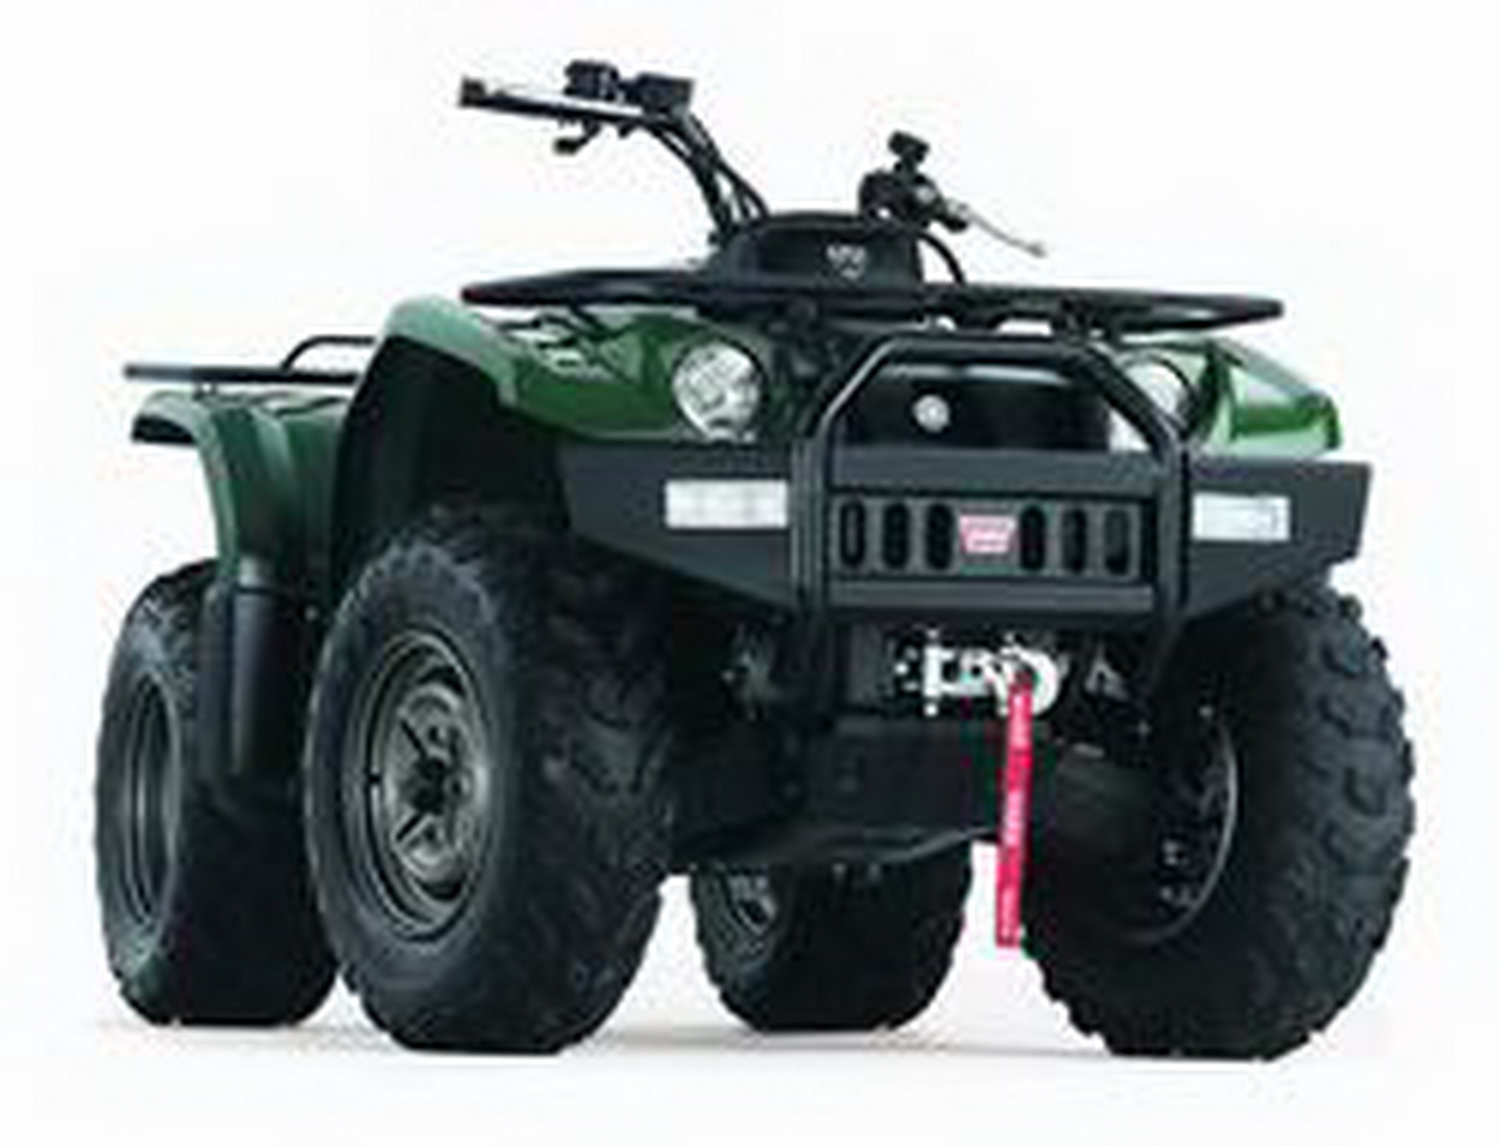 Warn Warn 83340 ATV Front Bumper Fits 09 Ranger 4x4 500 EFI